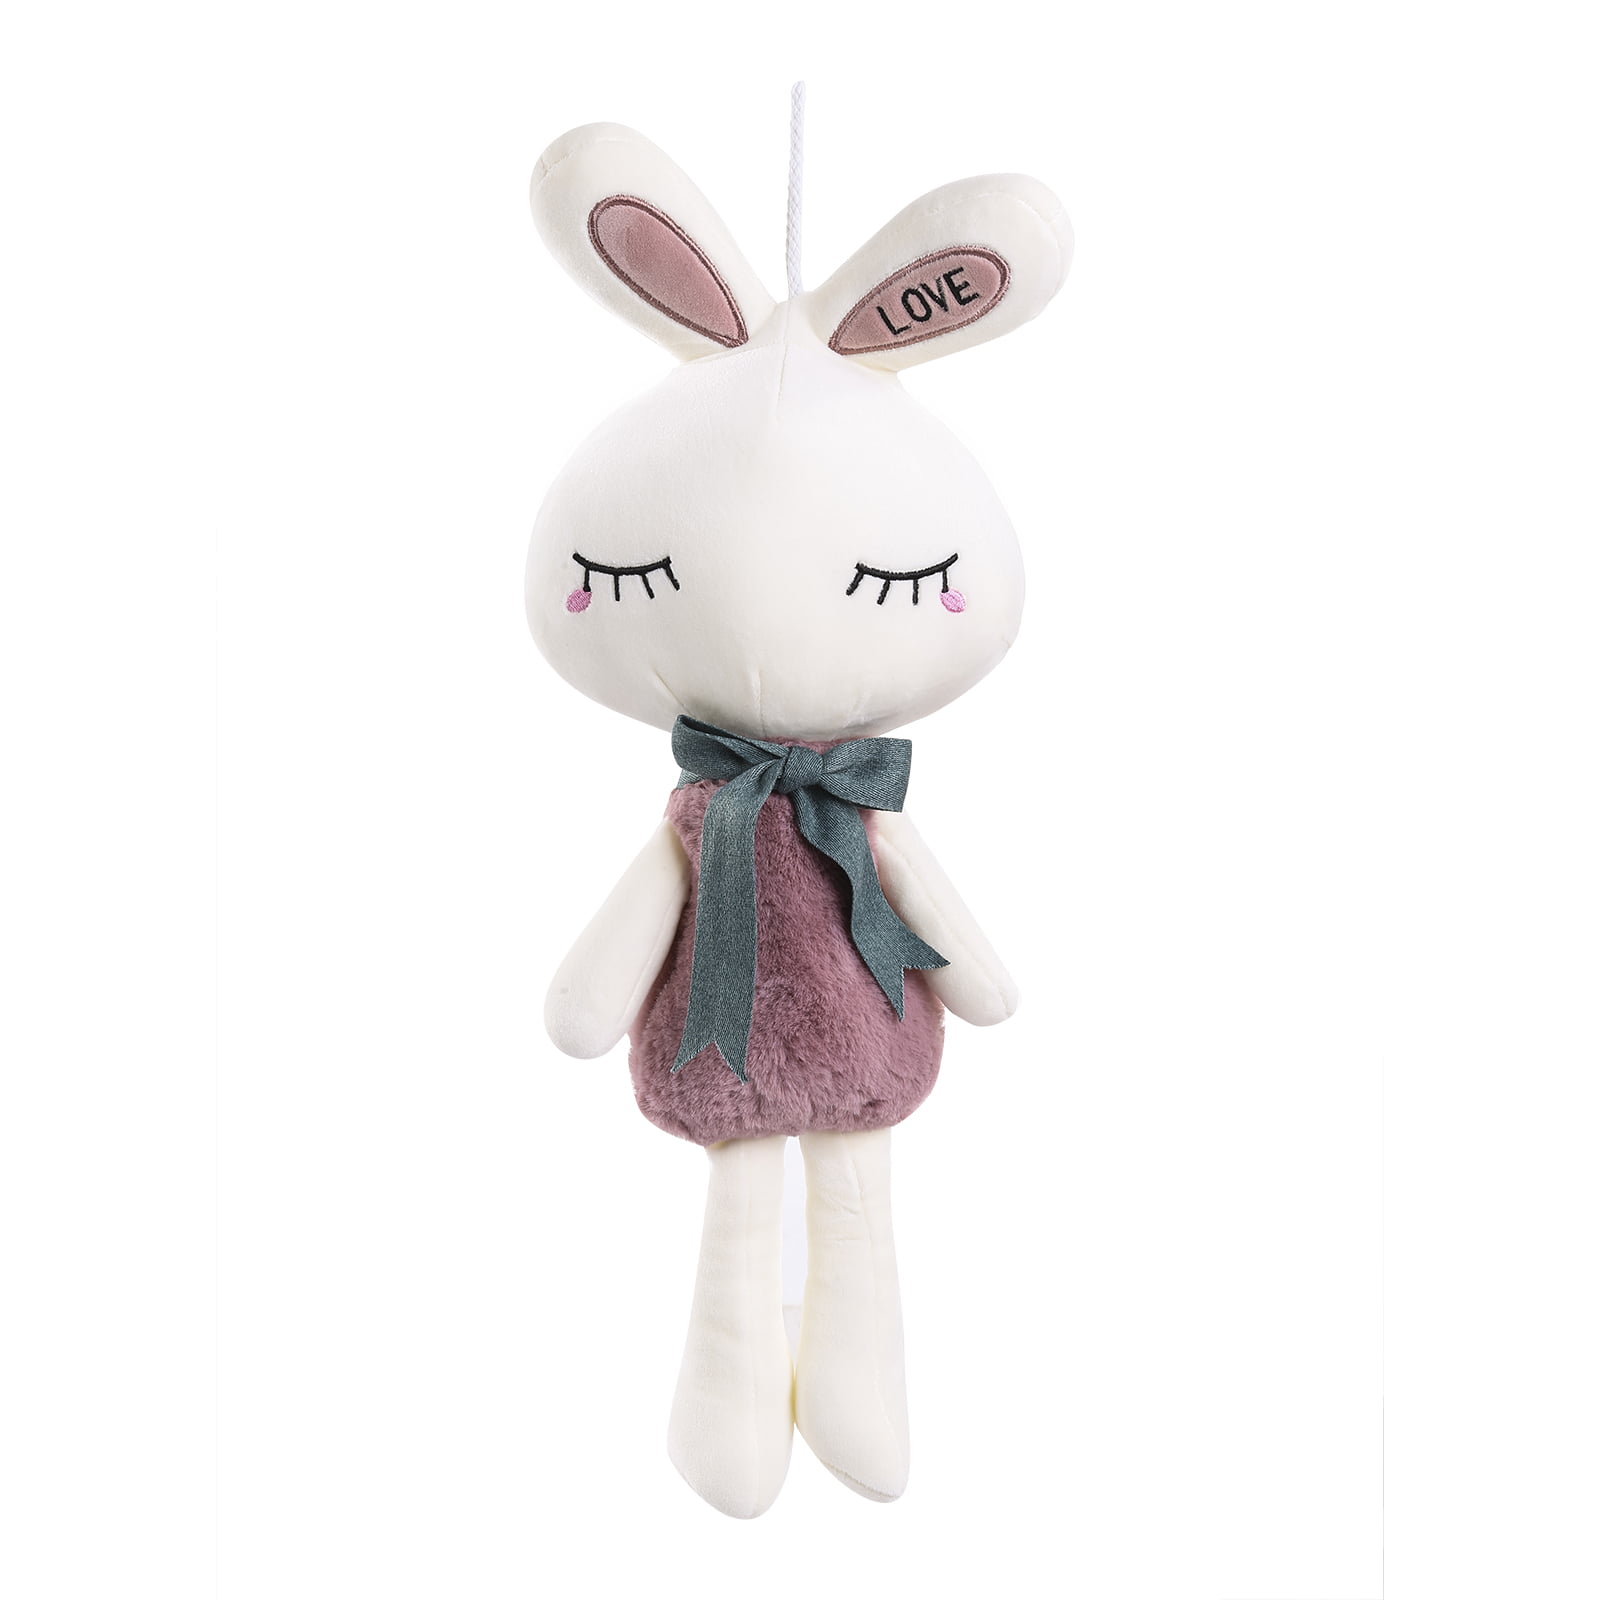 Stuffed Animal bunny stuffed bunny LOVE 20 inch plush Toy Rabbit 